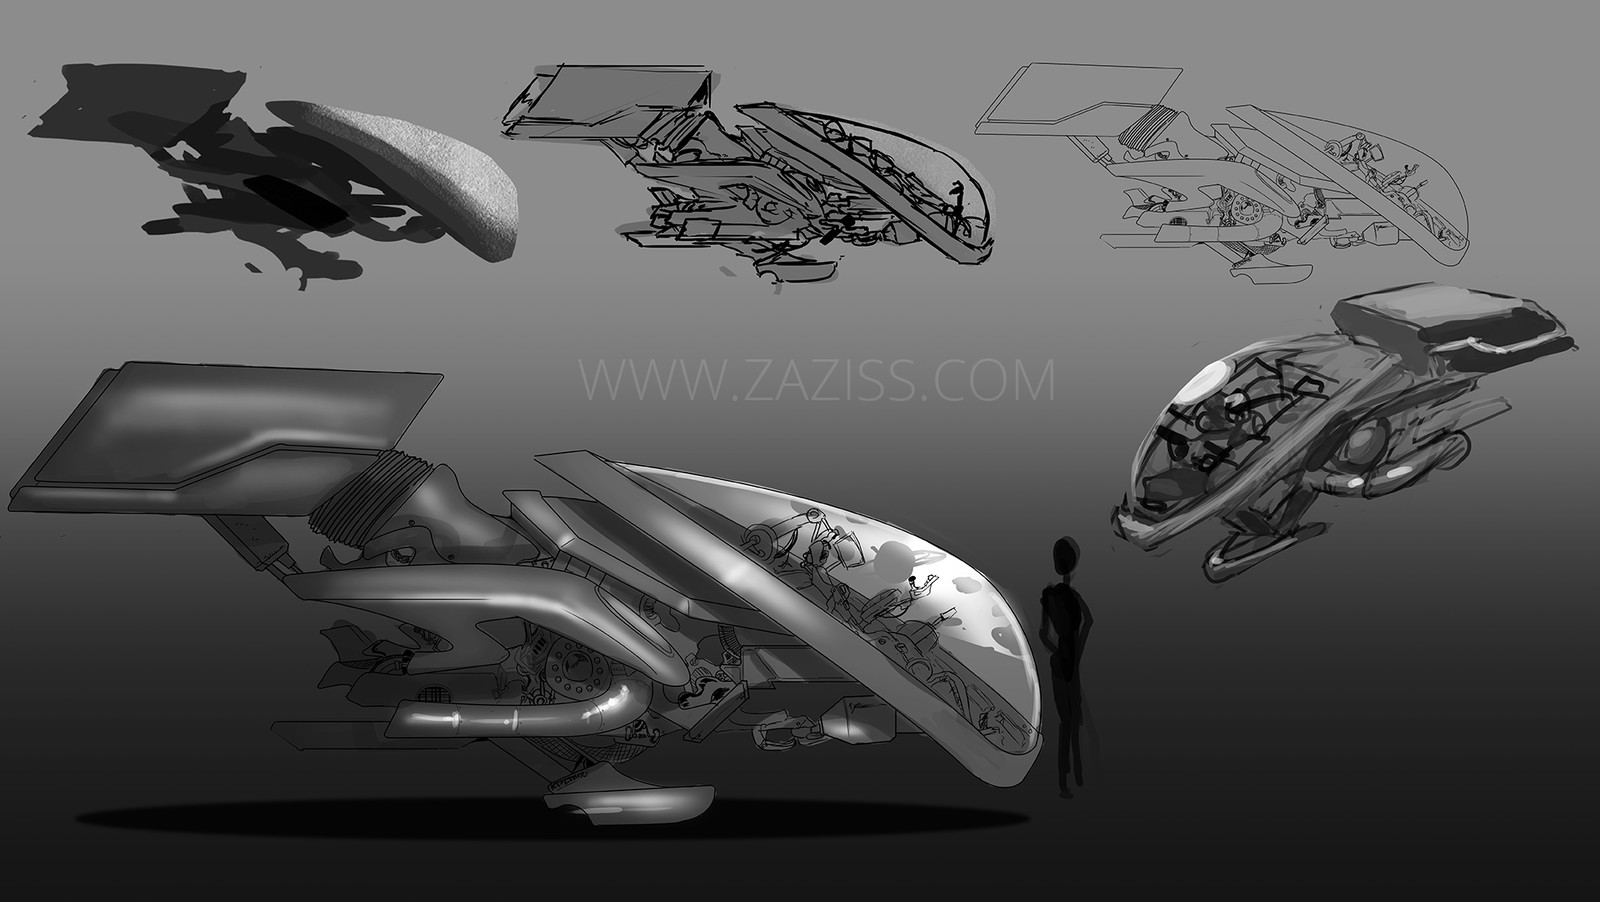 Individual spaceship, simple shape to sketch.